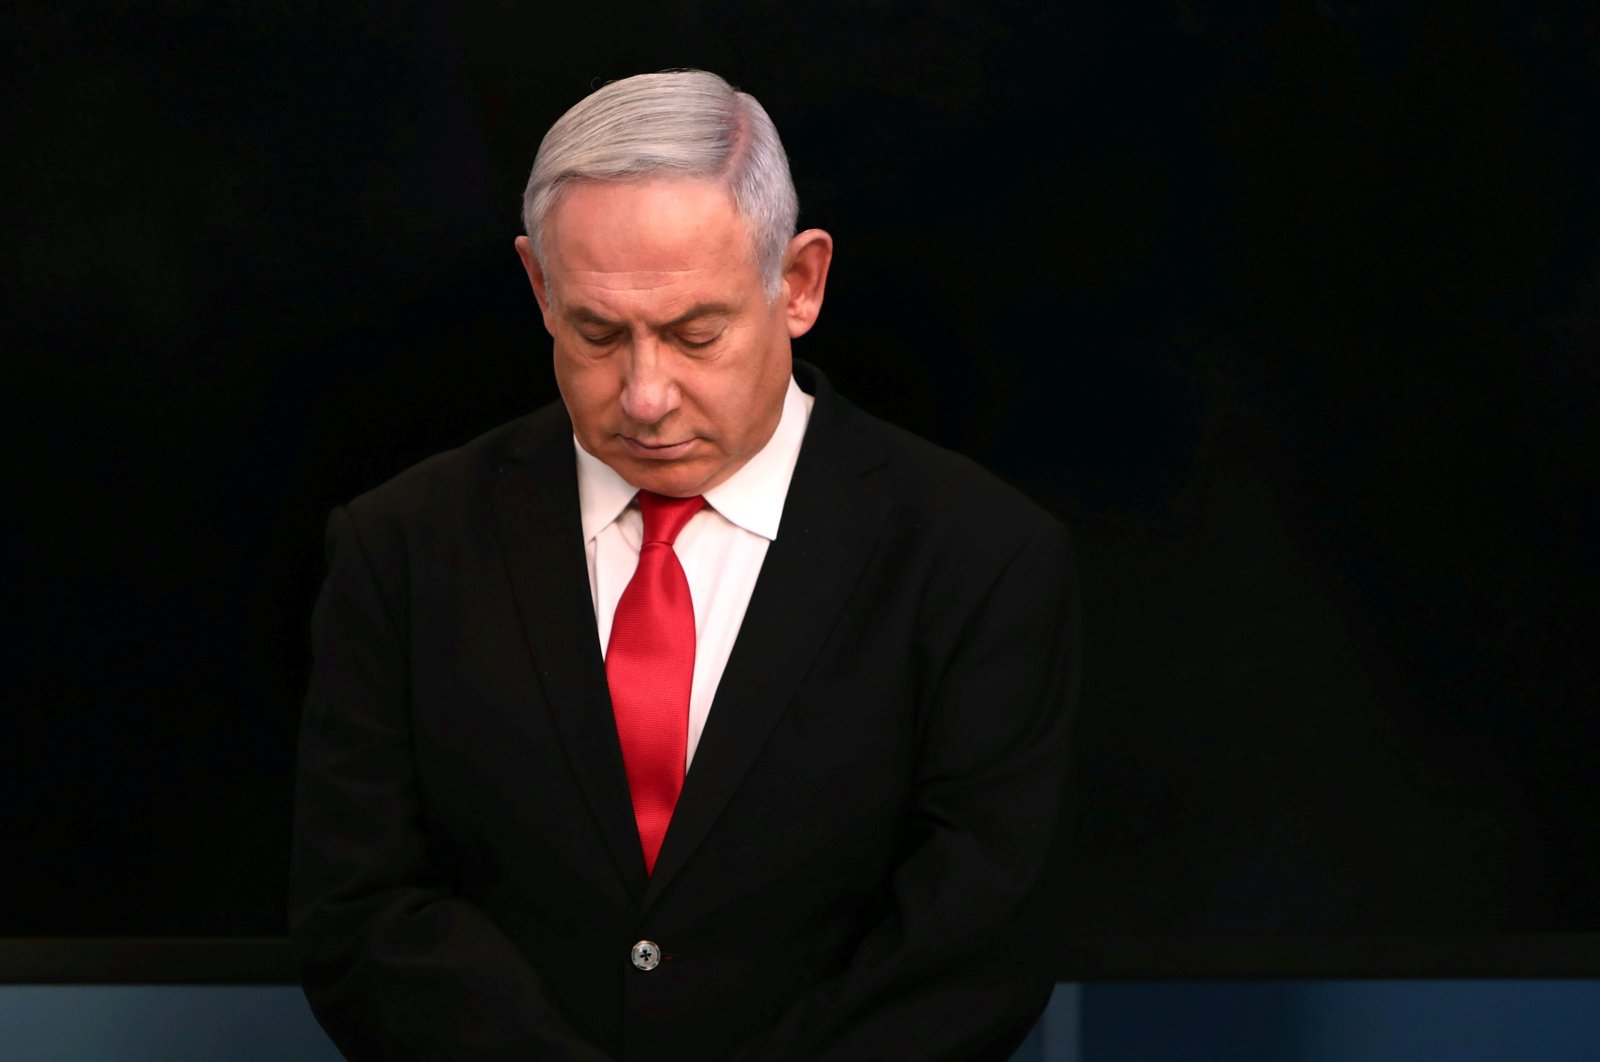 Israeli Prime Minister Benjamin Netanyahu arrives for a speech at his Jerusalem office, Israel, March 14, 2020. (Reuters Photo)